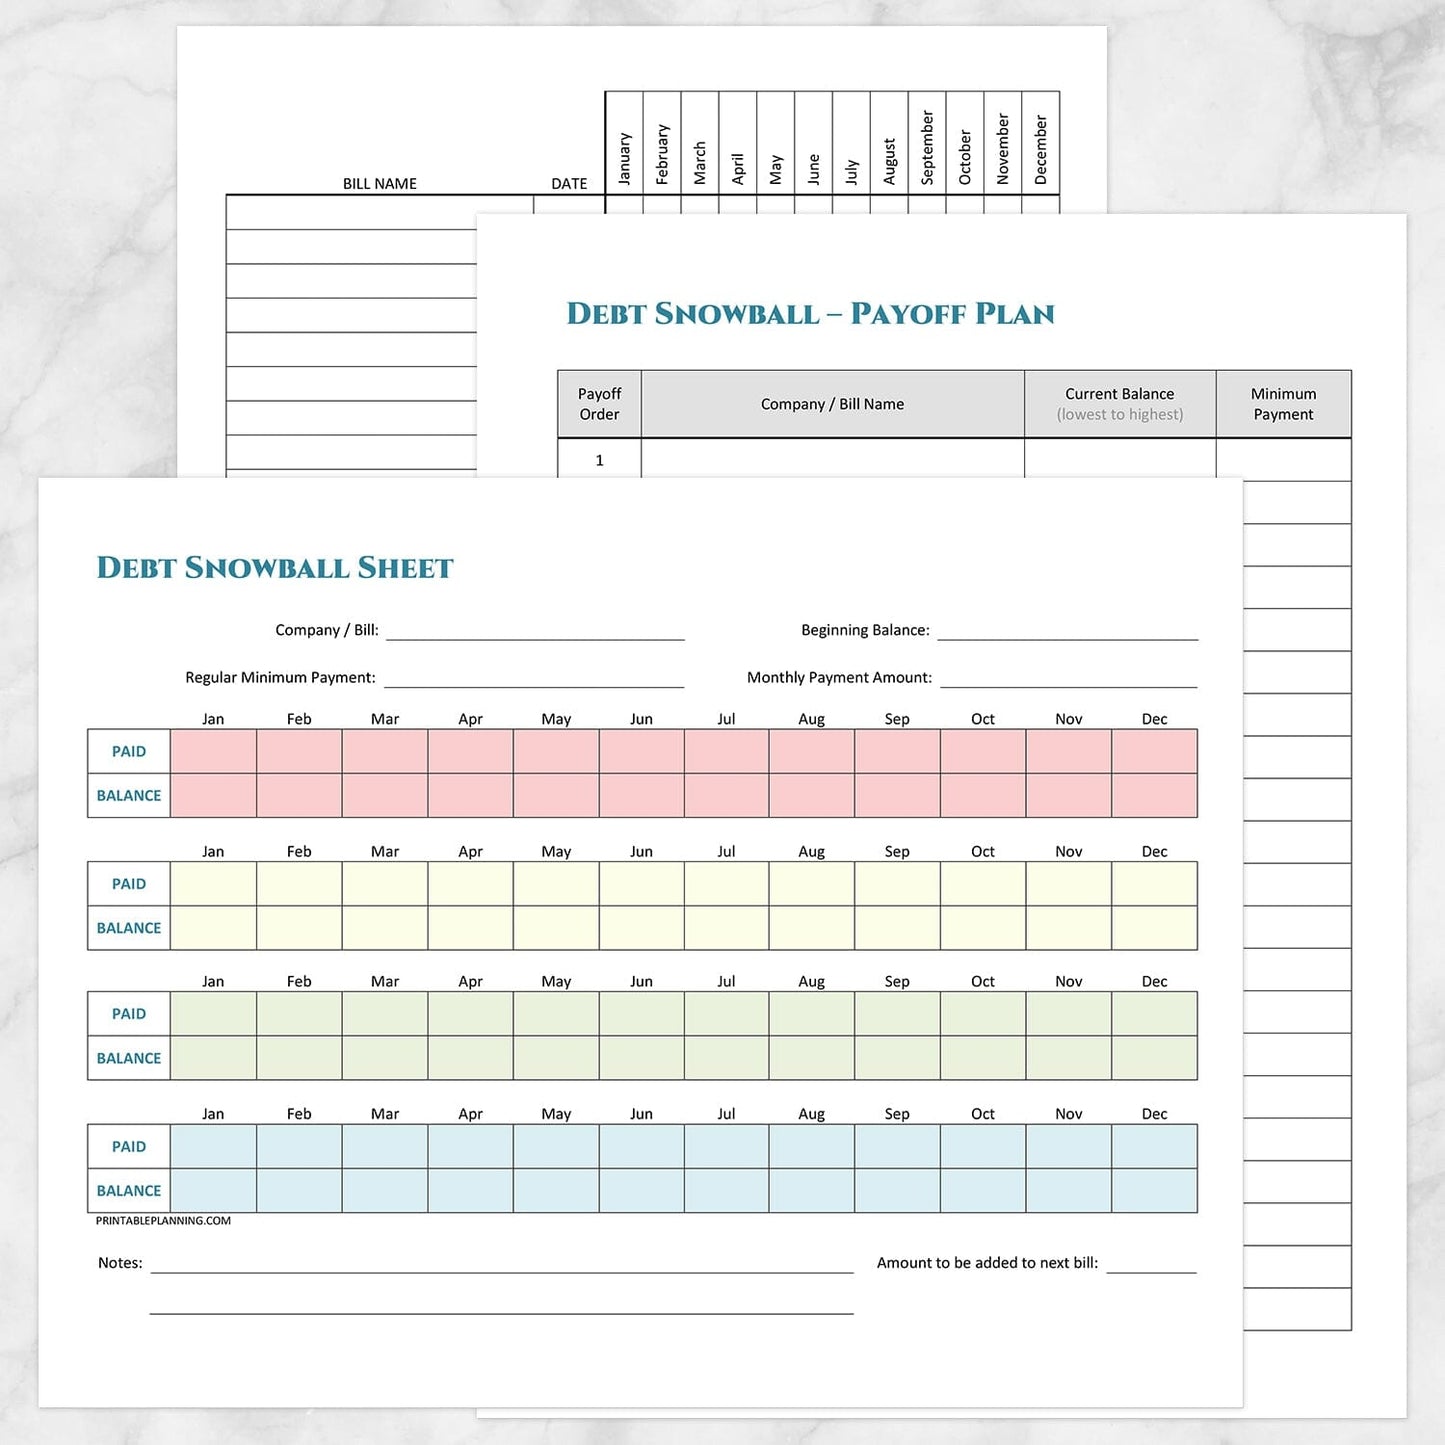 Printable Debt Snowball Sheet, Debt Payoff Plan, and Bill Payment Tracker Log - BUNDLE at Printable Planning